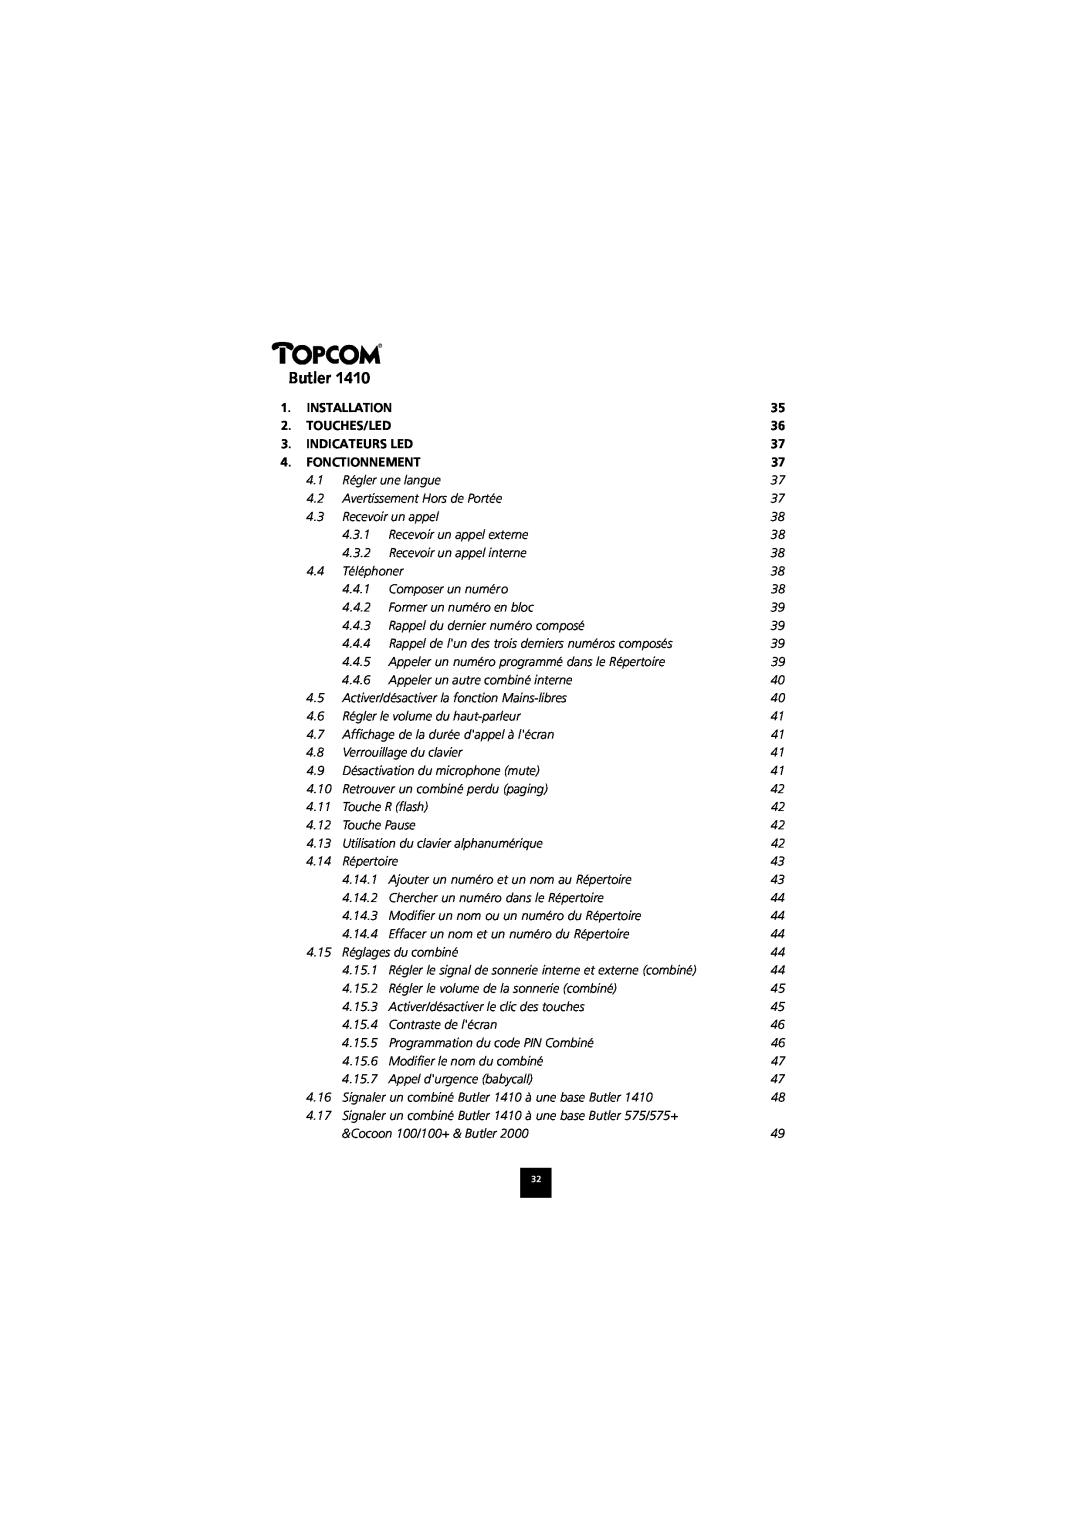 Topcom 1410 manual Butler, Installation, Touches/Led, Indicateurs Led, Fonctionnement 